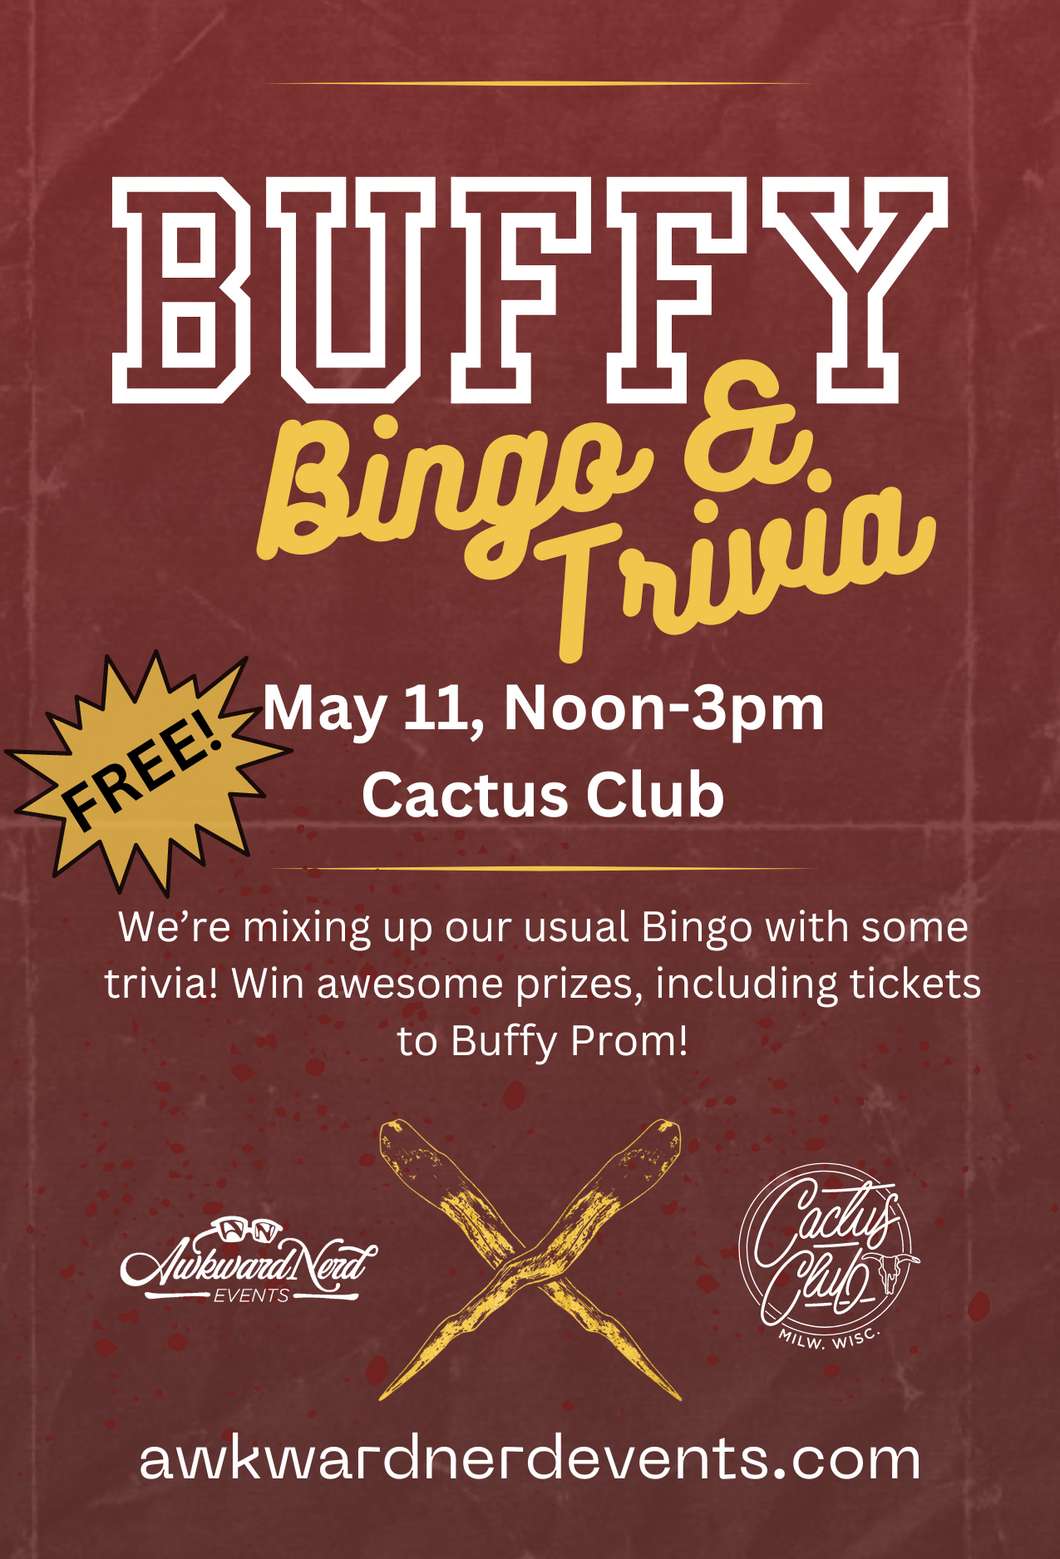 BUFFY - Bingo & Trivia